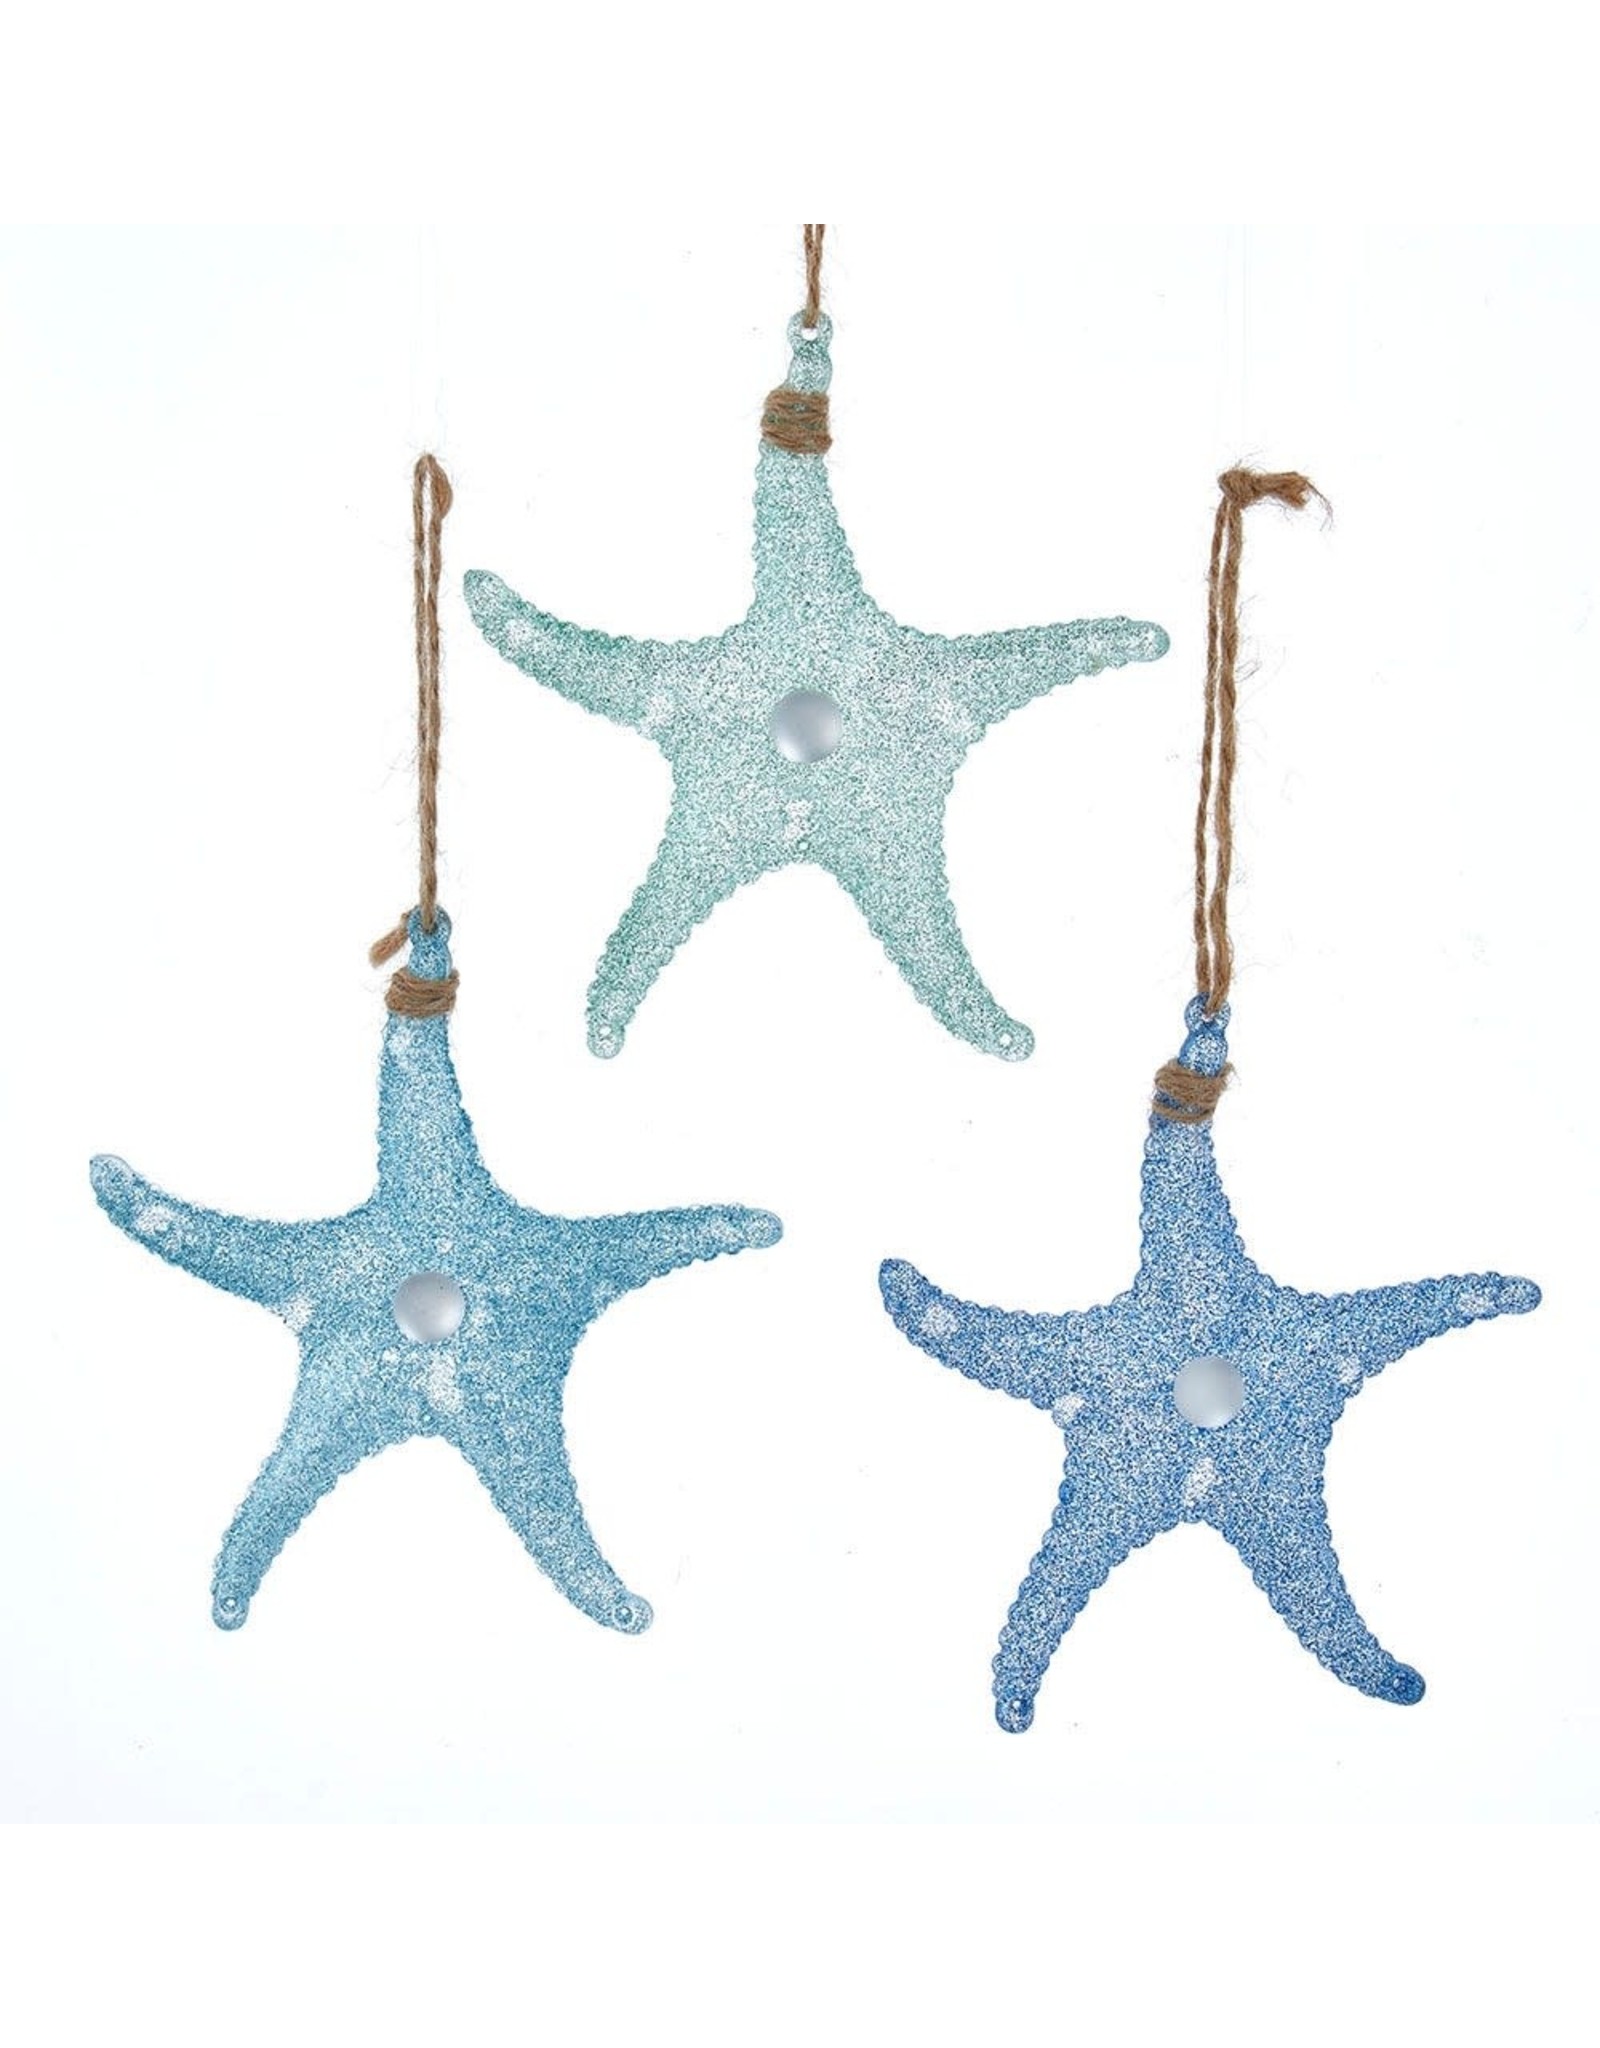 Kurt Adler Acrylic Glittered Starfish Ornaments 3 Assorted